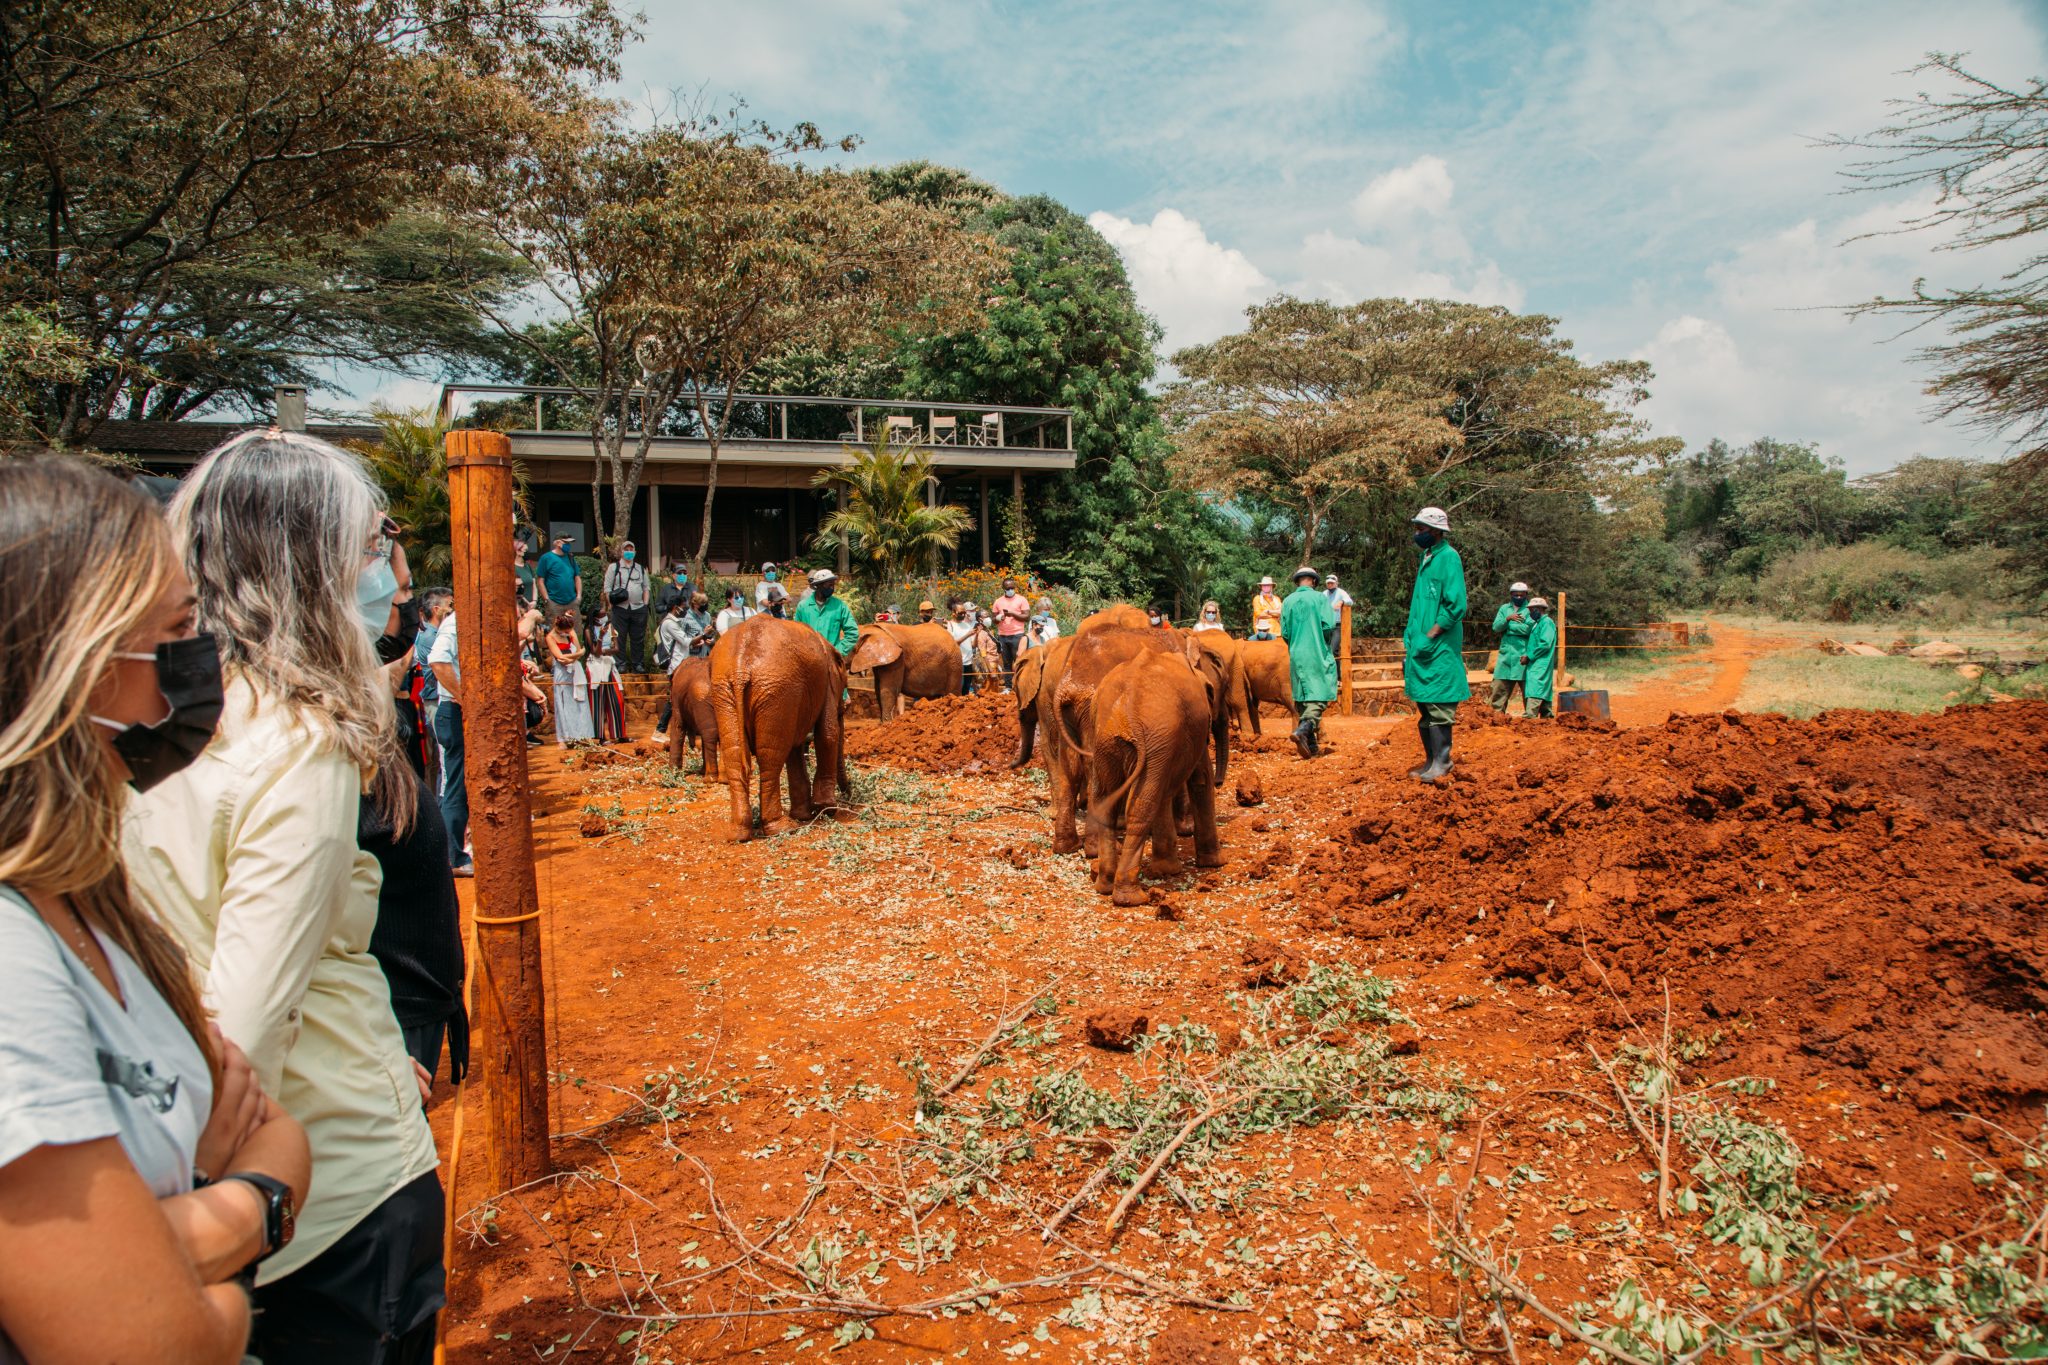 The public Feeding time at Sheldrick Wildlife trust elephant orphanage in Nairobi Kenya